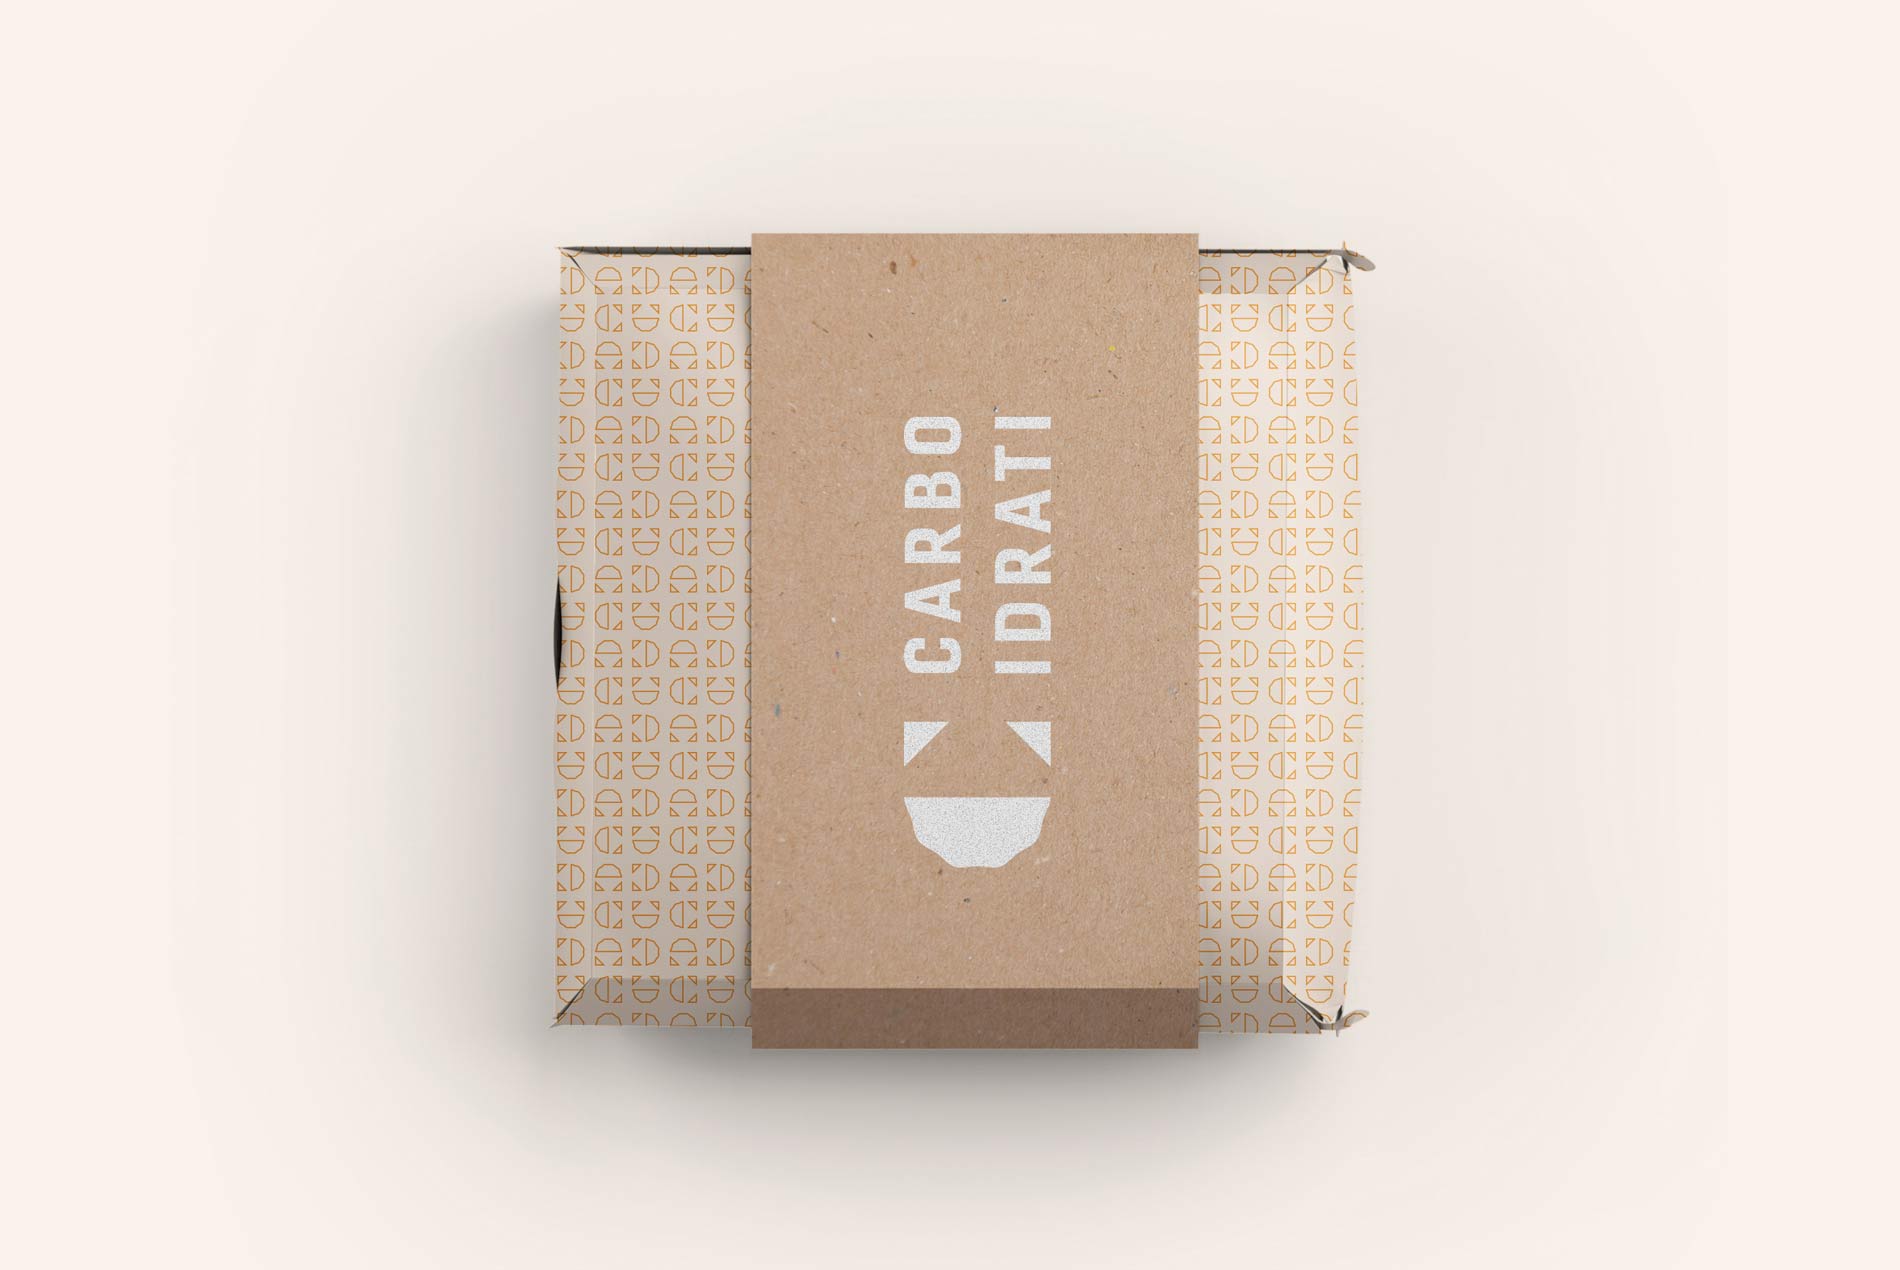 Carboidrati_lunch-box